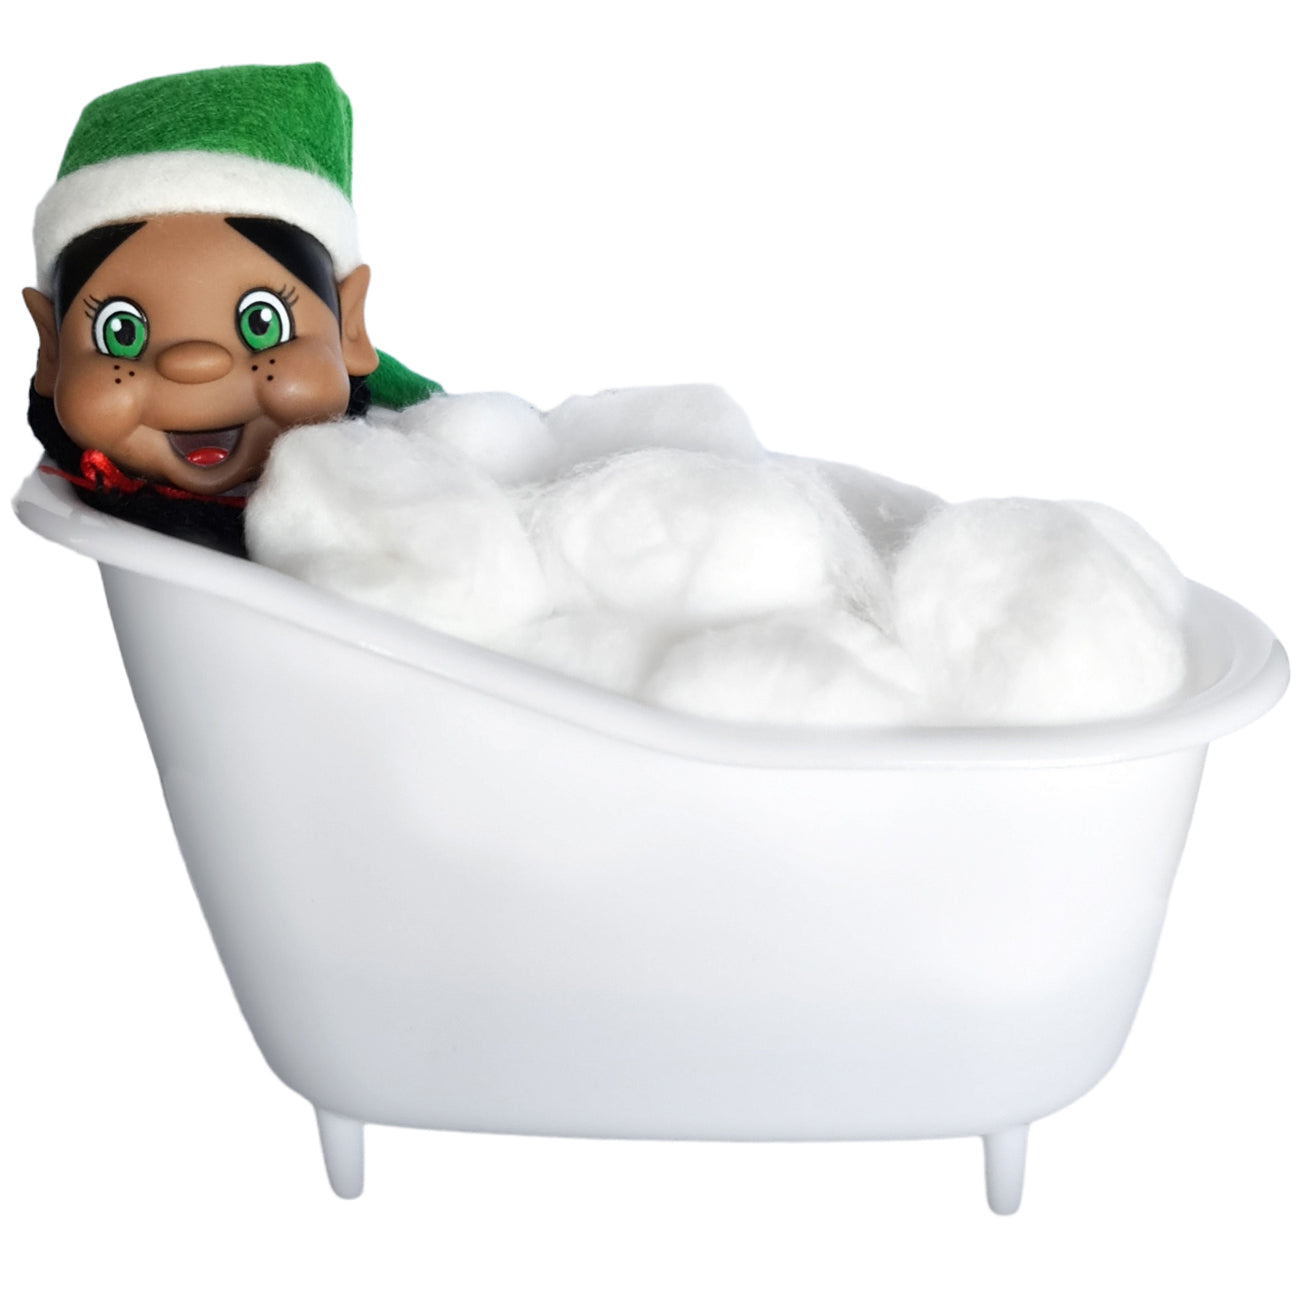 Elf bath prop